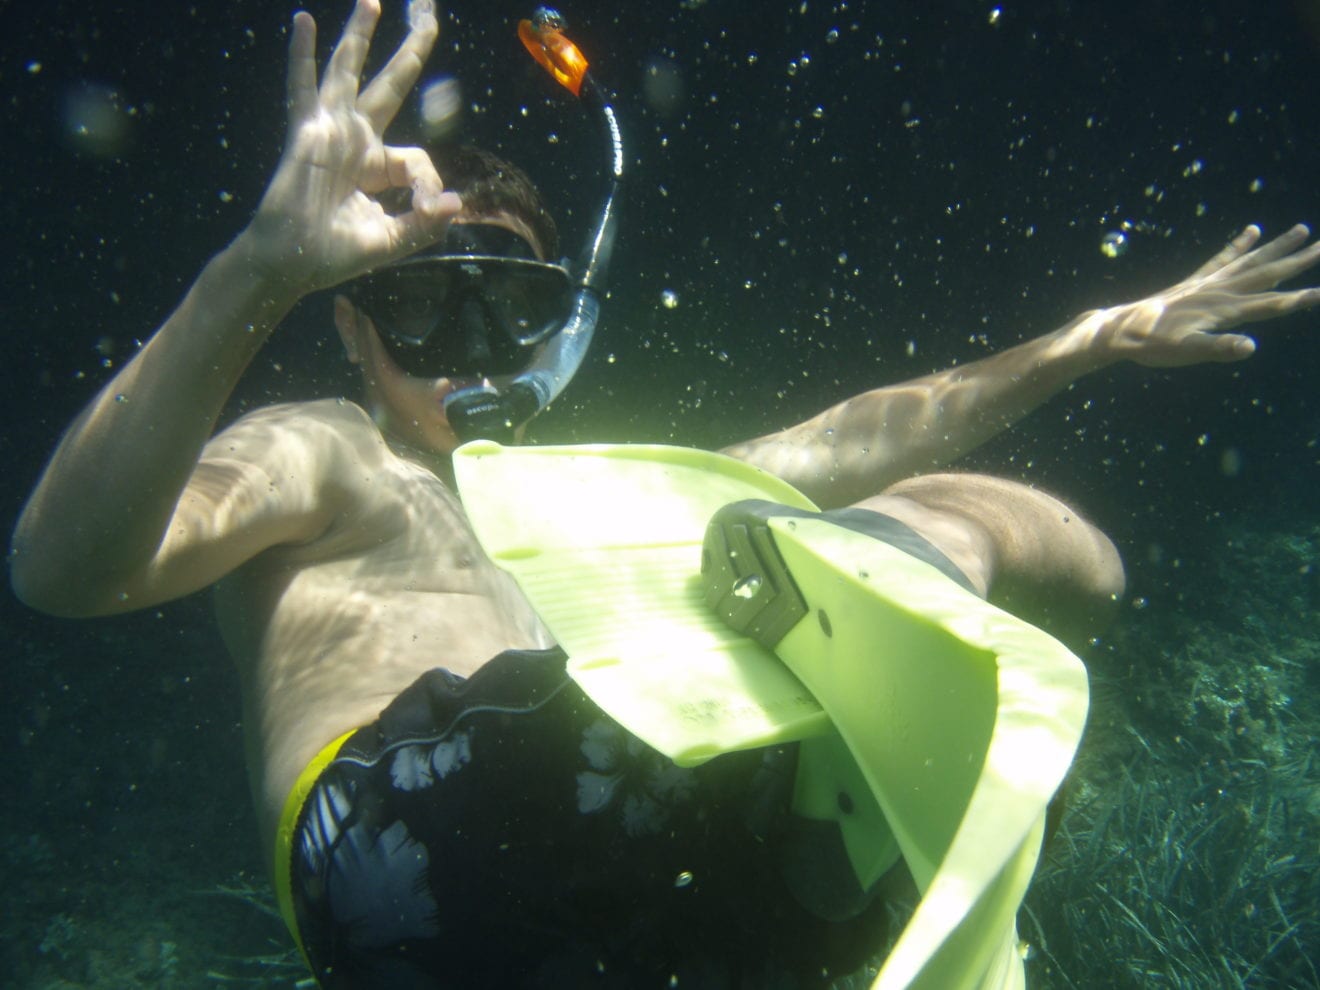 Lær at snorkeldykke sikkert!